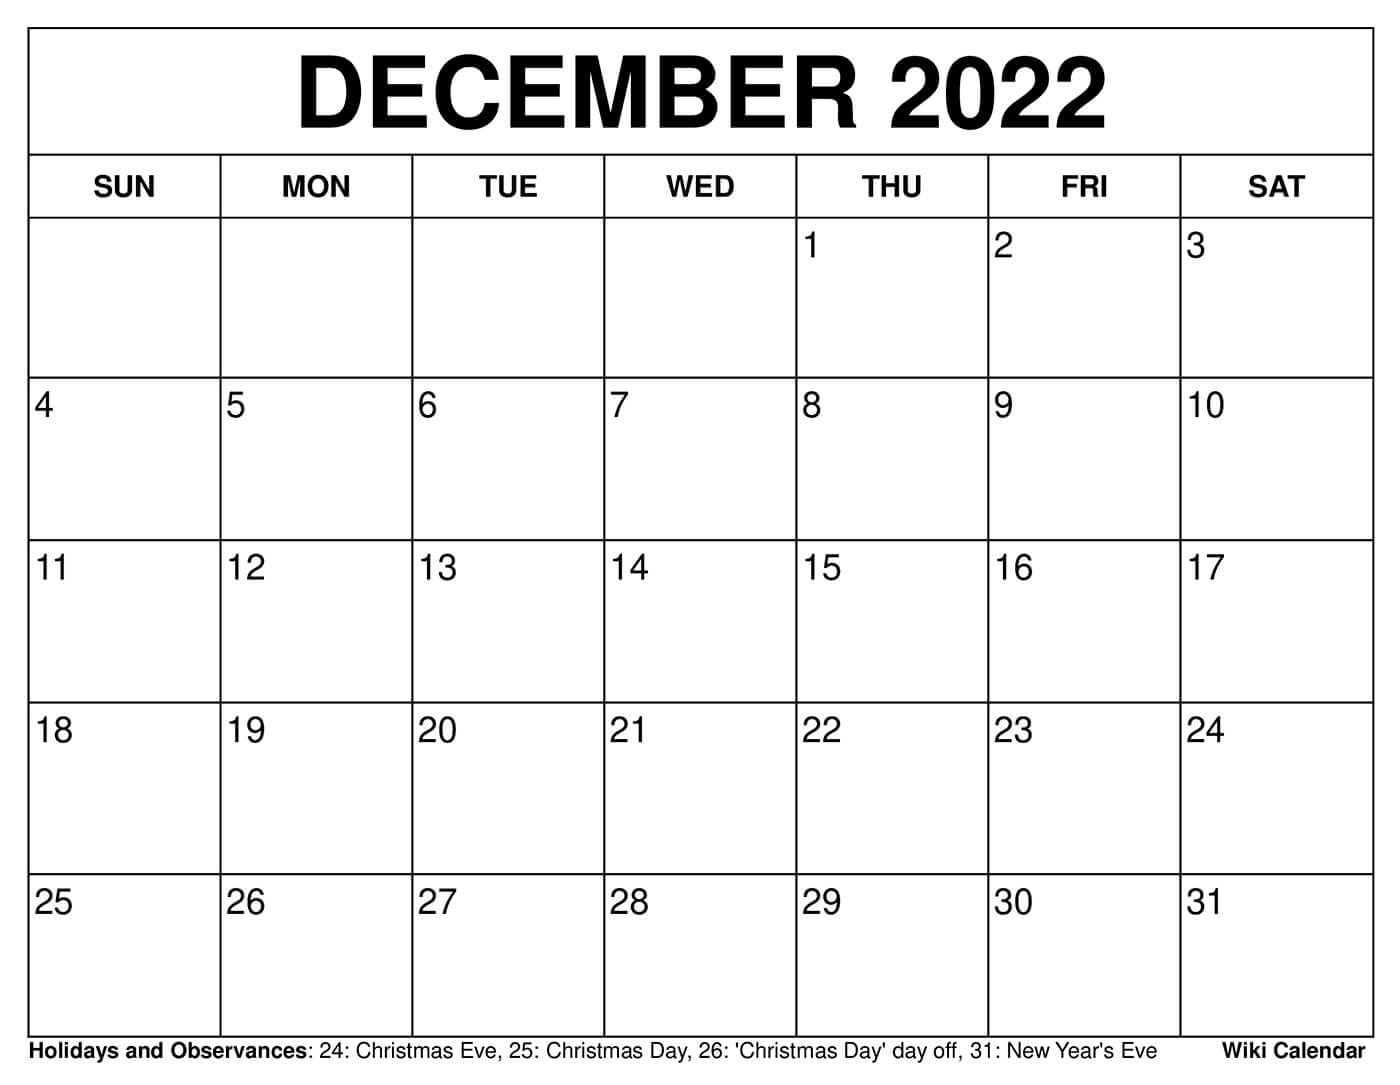 Dec 2022 Calendar With Holidays Free Printable December 2022 Calendars - Wiki Calendar